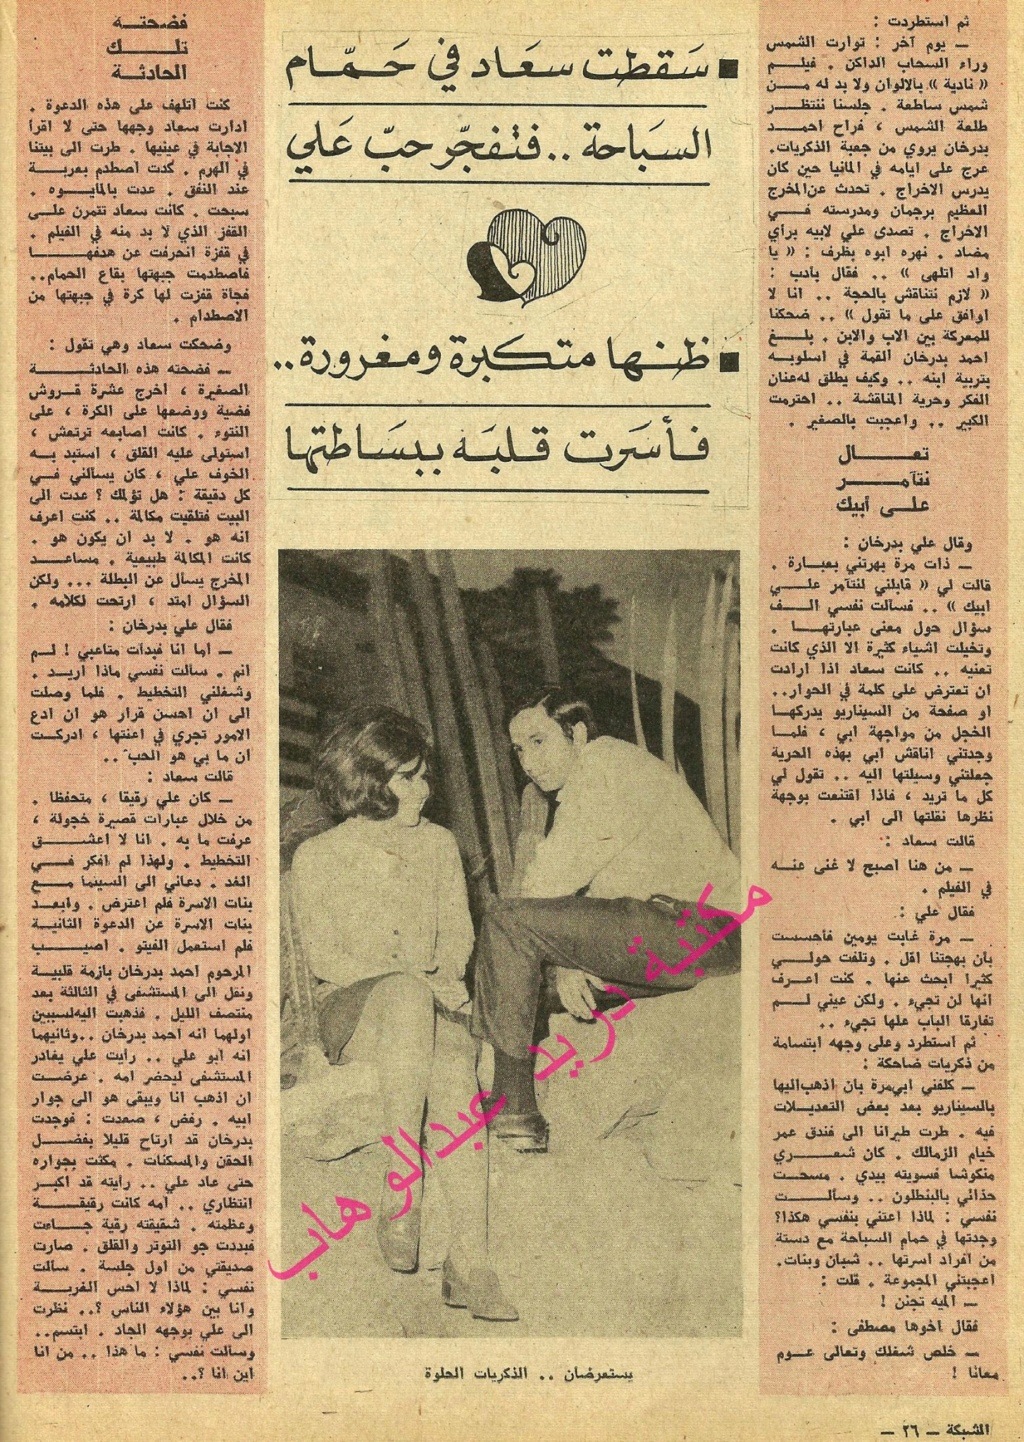 بدرخان - حوار صحفي : قصة حب سعاد حسني وعلي بدرخان 1970 م 3202